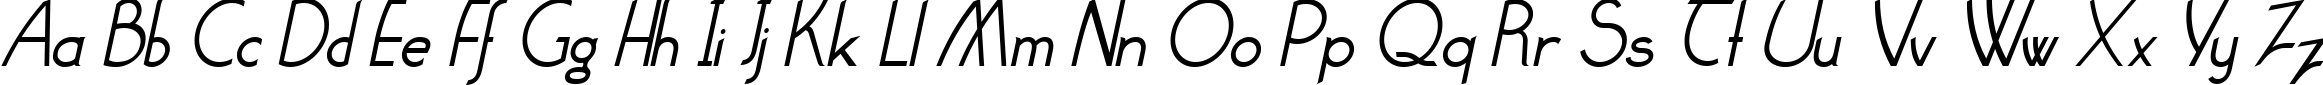 Пример написания английского алфавита шрифтом Claritty_Italic